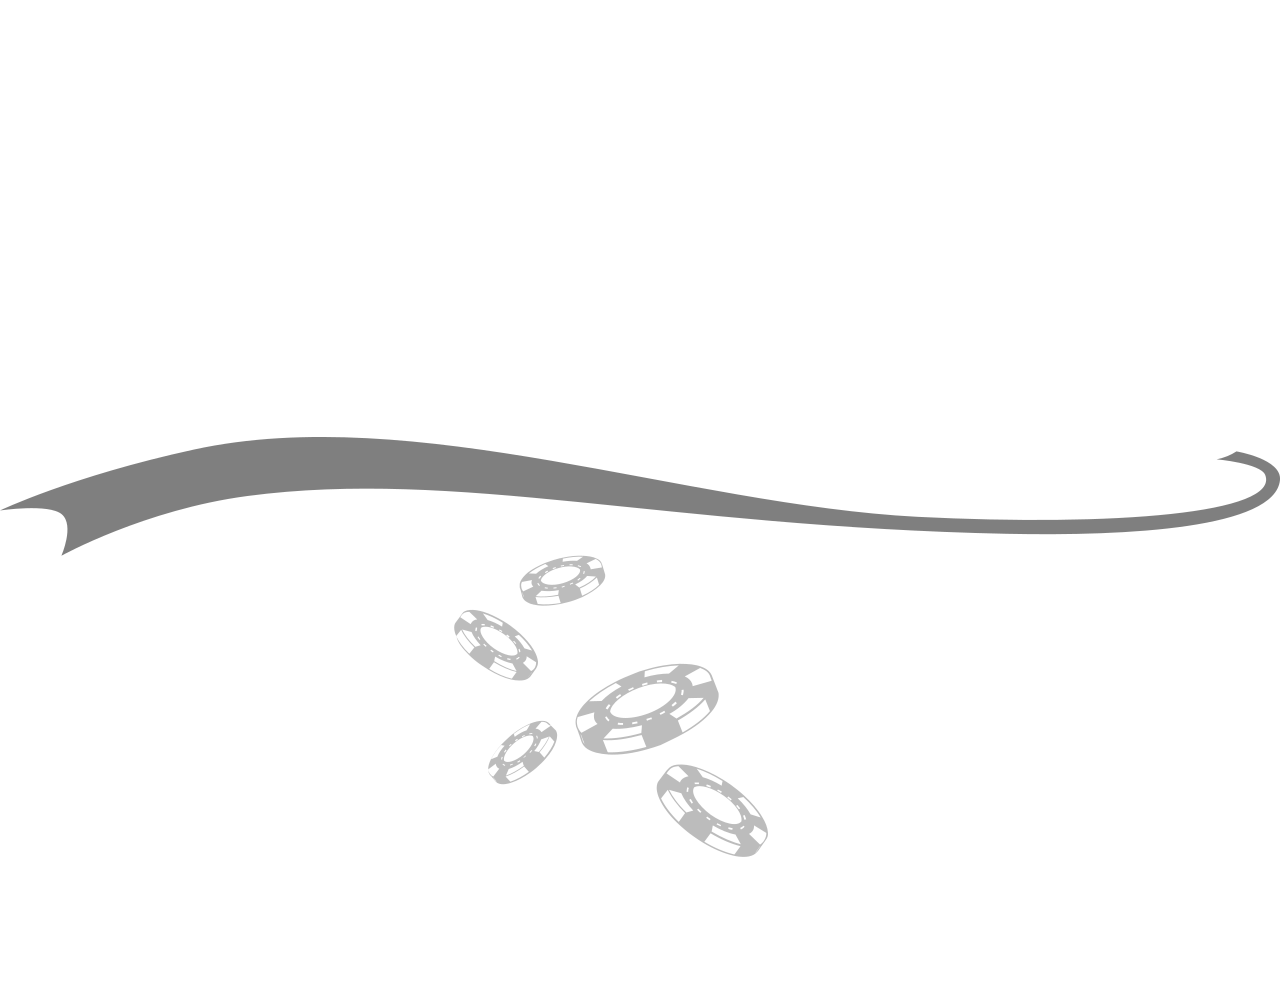 LcN4L's logo